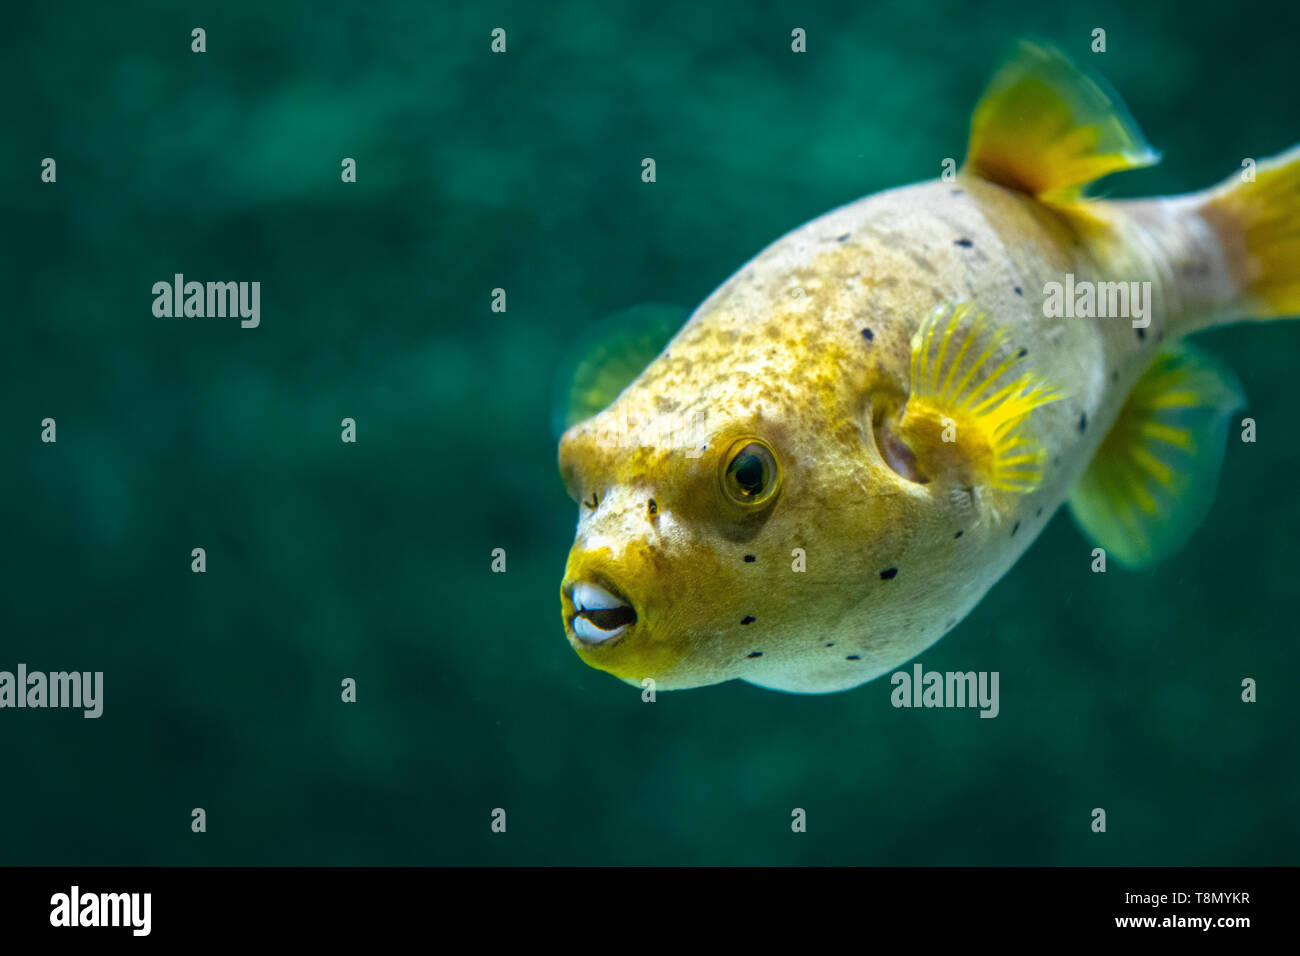 Yellow Blackspotted (or Dog Faced) Puffer  fish (Arothron nigropunctatus) swimming in Aquarium tank Stock Photo